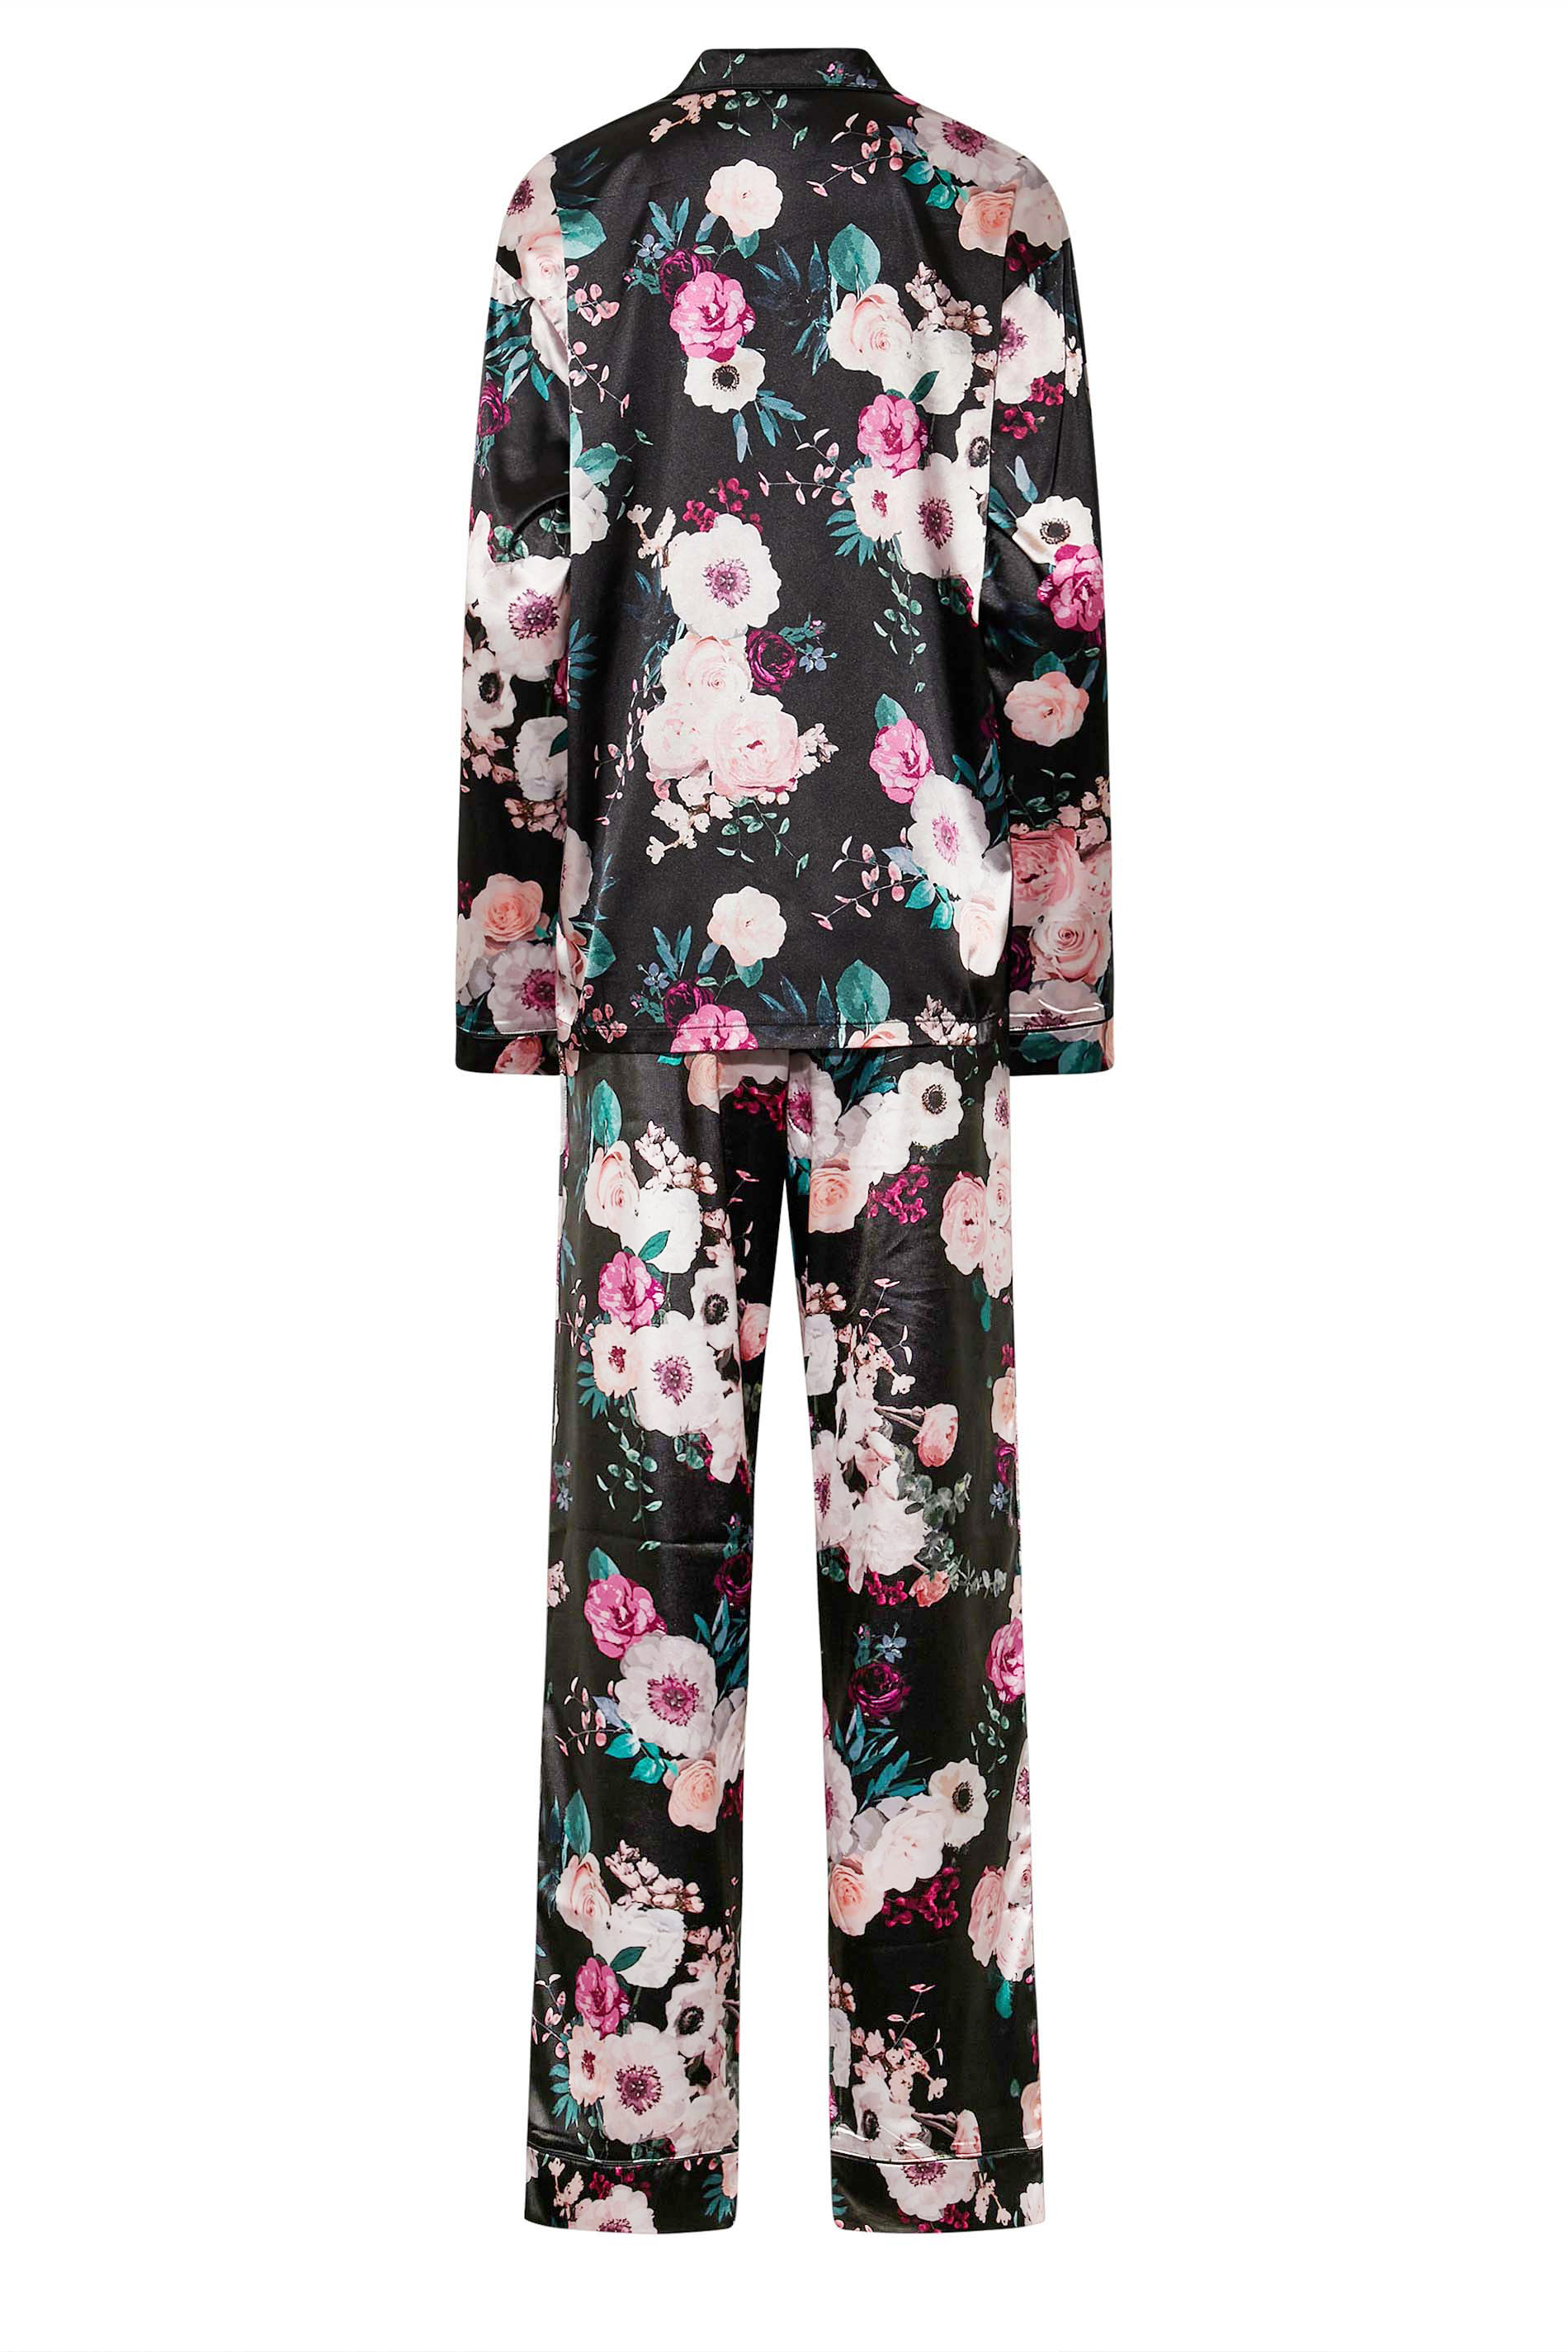 LTS Tall Women's Black Floral Satin Pyjama Set | Long Tall Sally  3